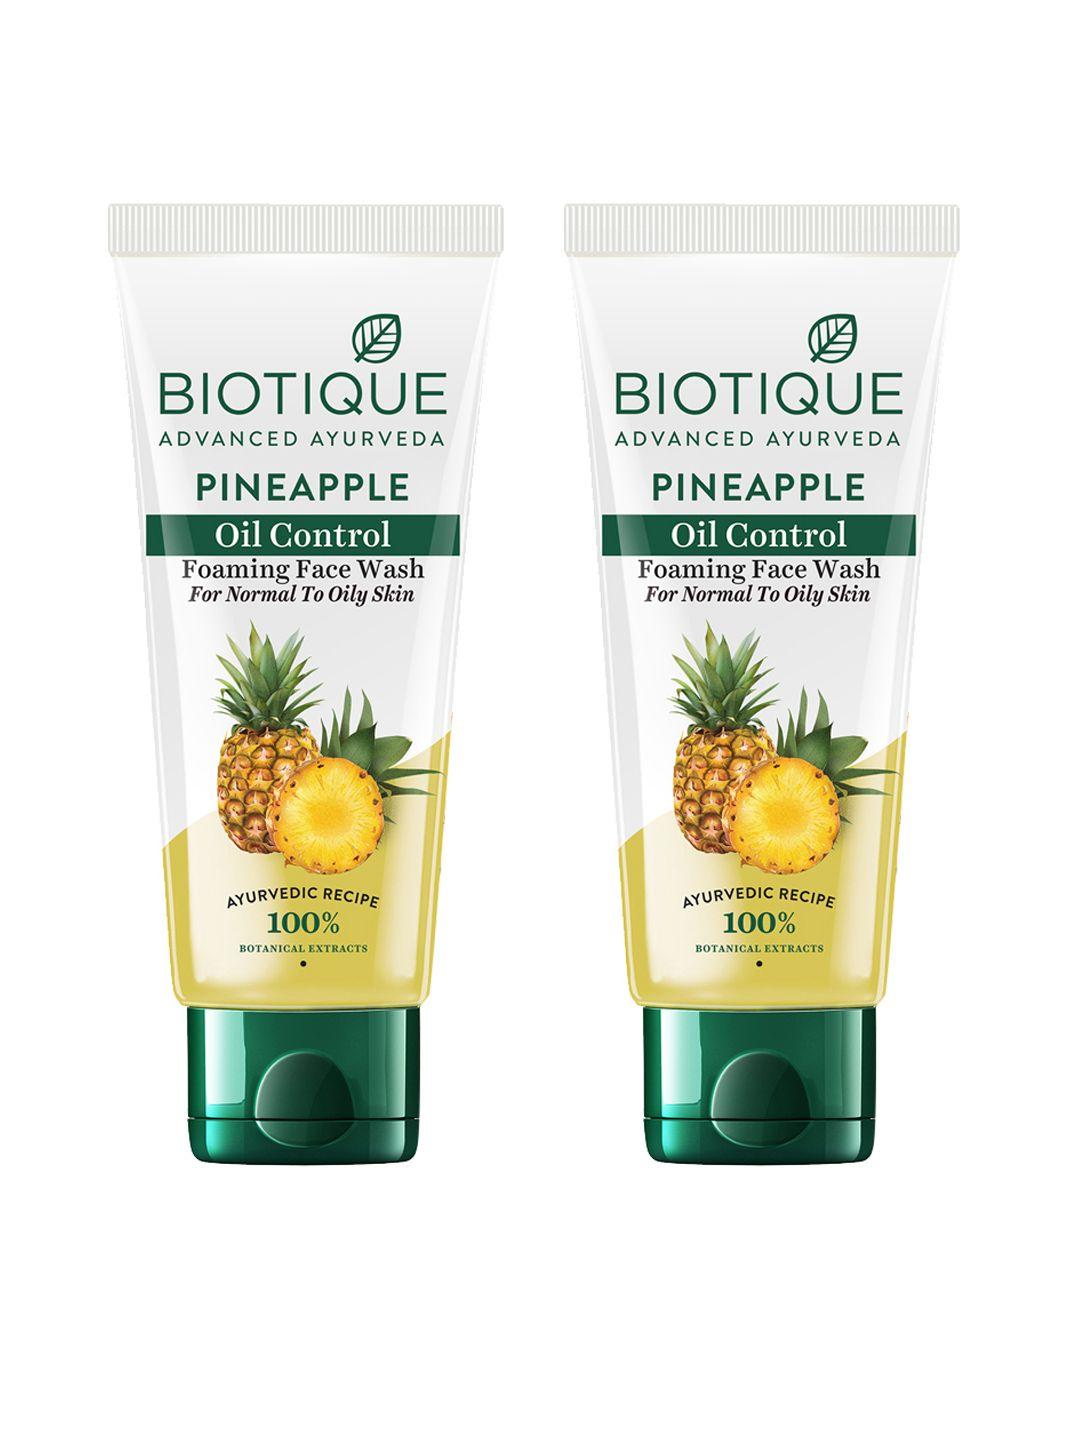 biotique set of 2 bio pineapple oil balancing face wash - 100ml each